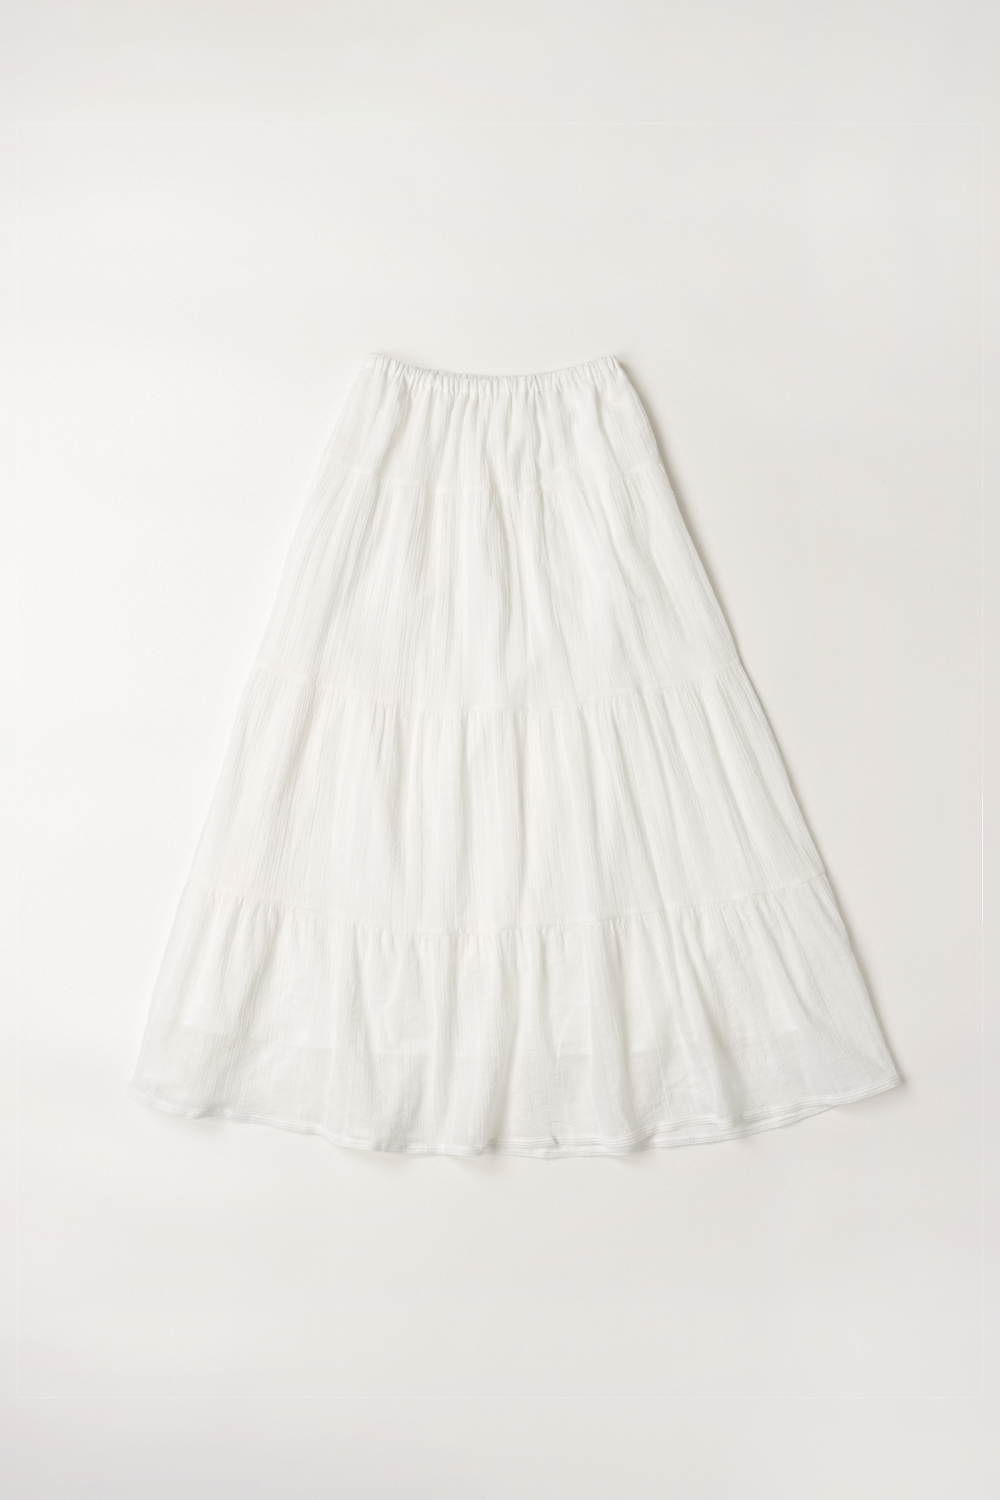 Hippie Girls  Skirt (White)